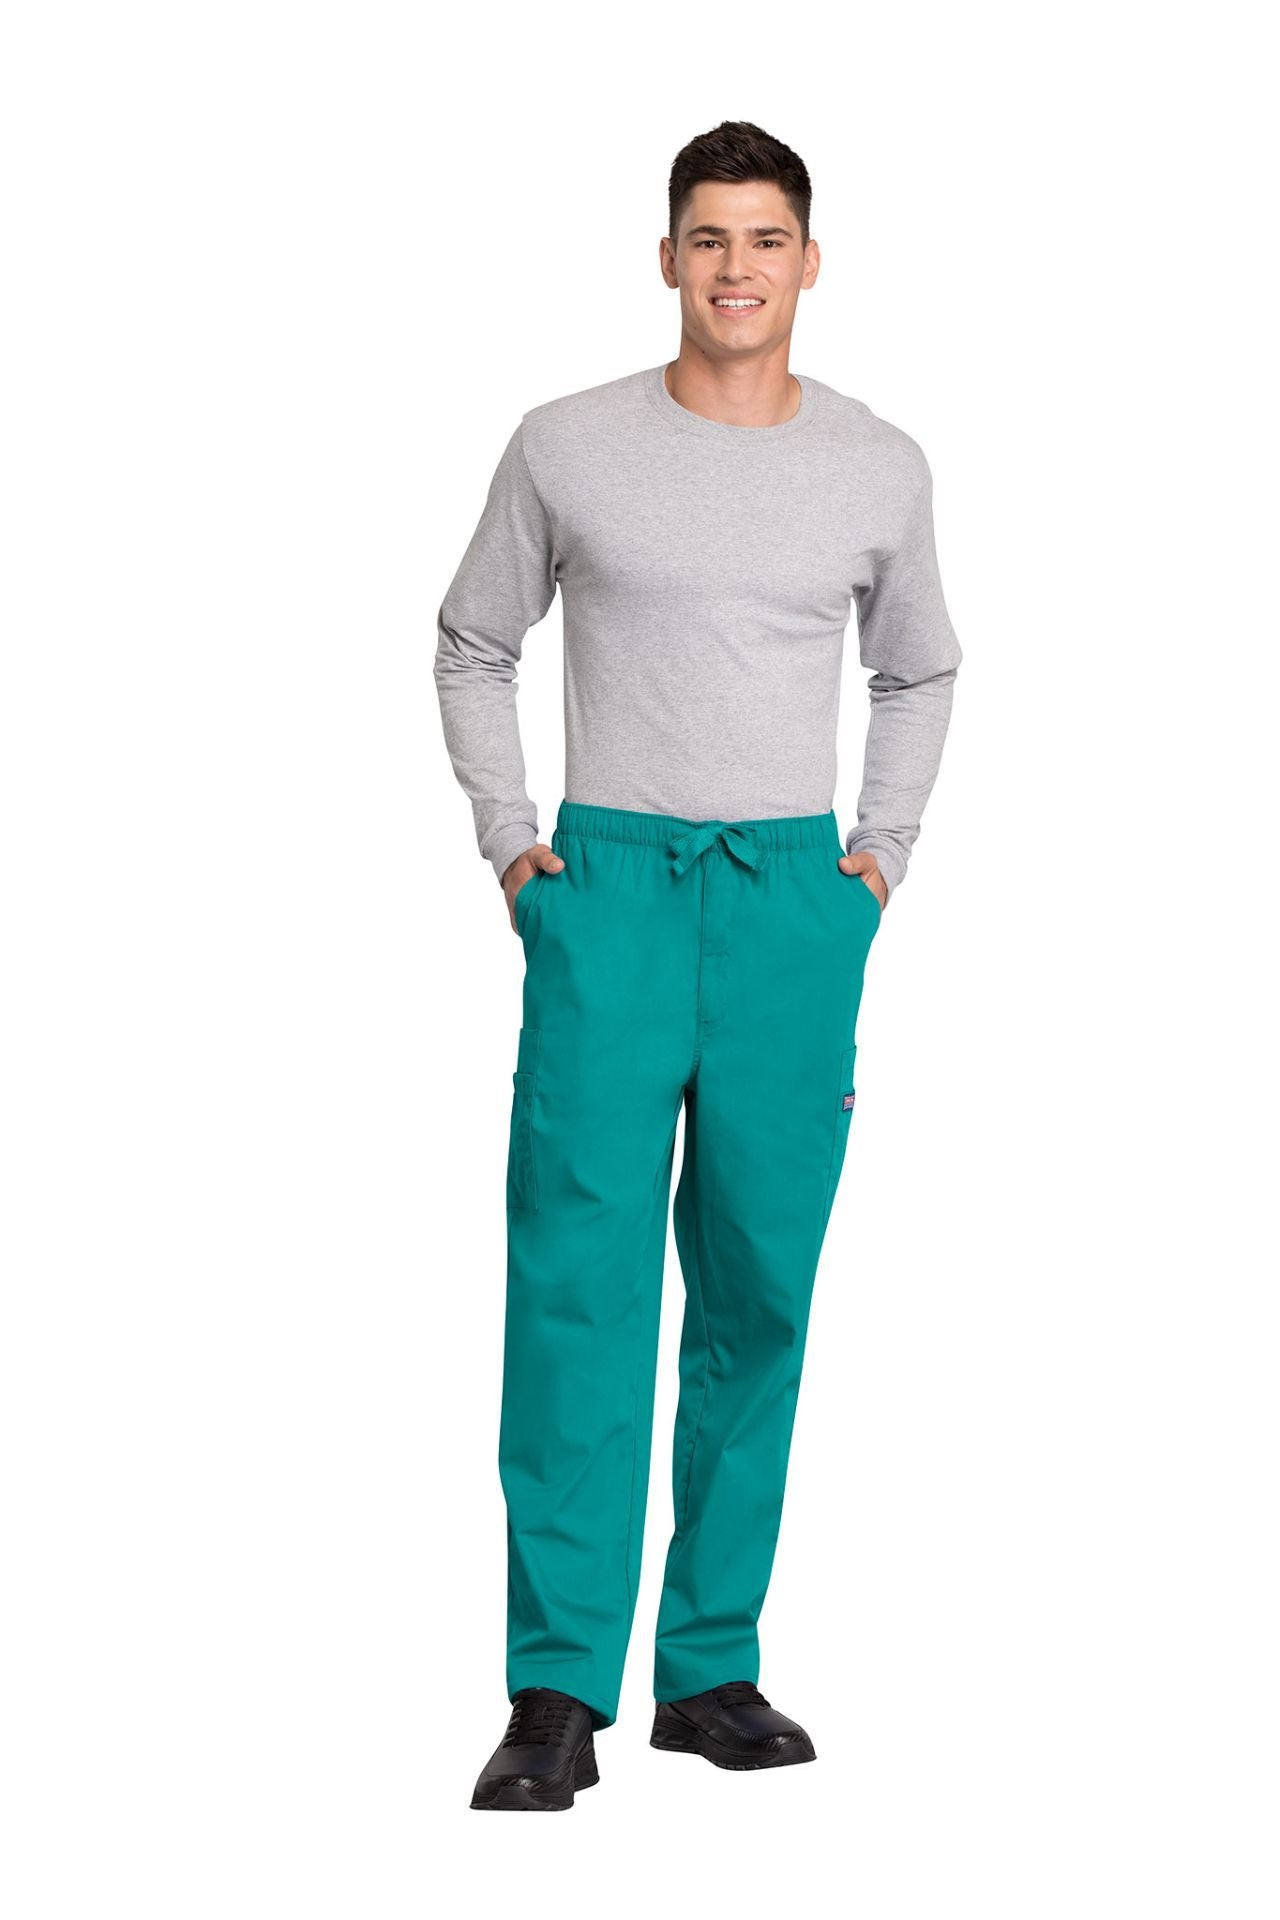 Teal Blue - Cherokee Workwear Originals Men's Fly Front Cargo Pant